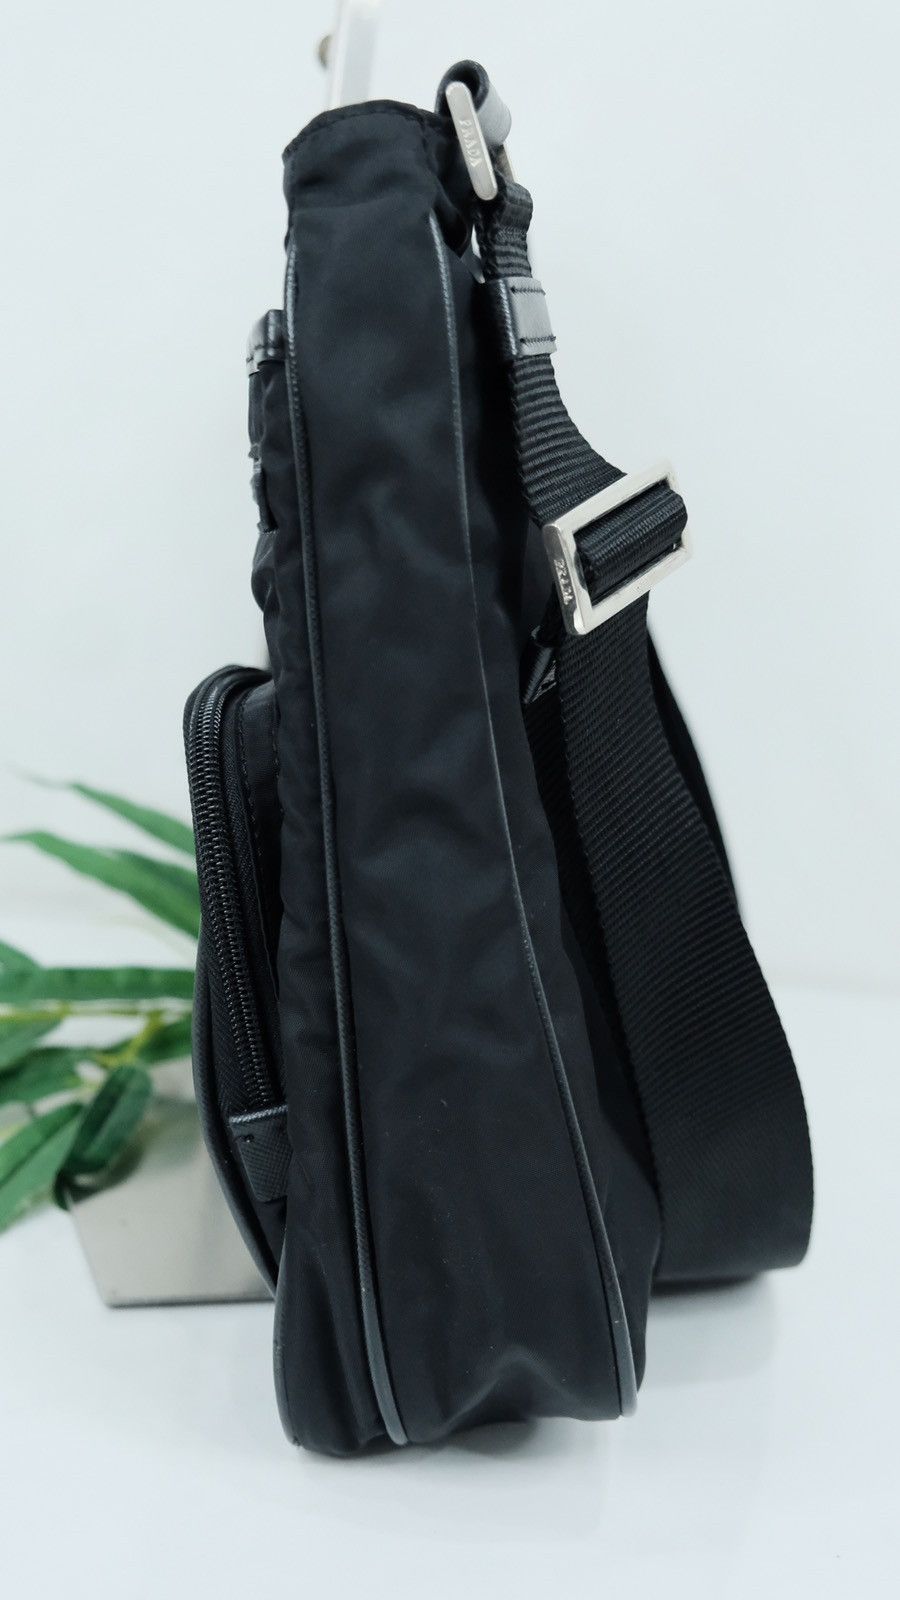 Authentic prada sling bag black nylon - 5